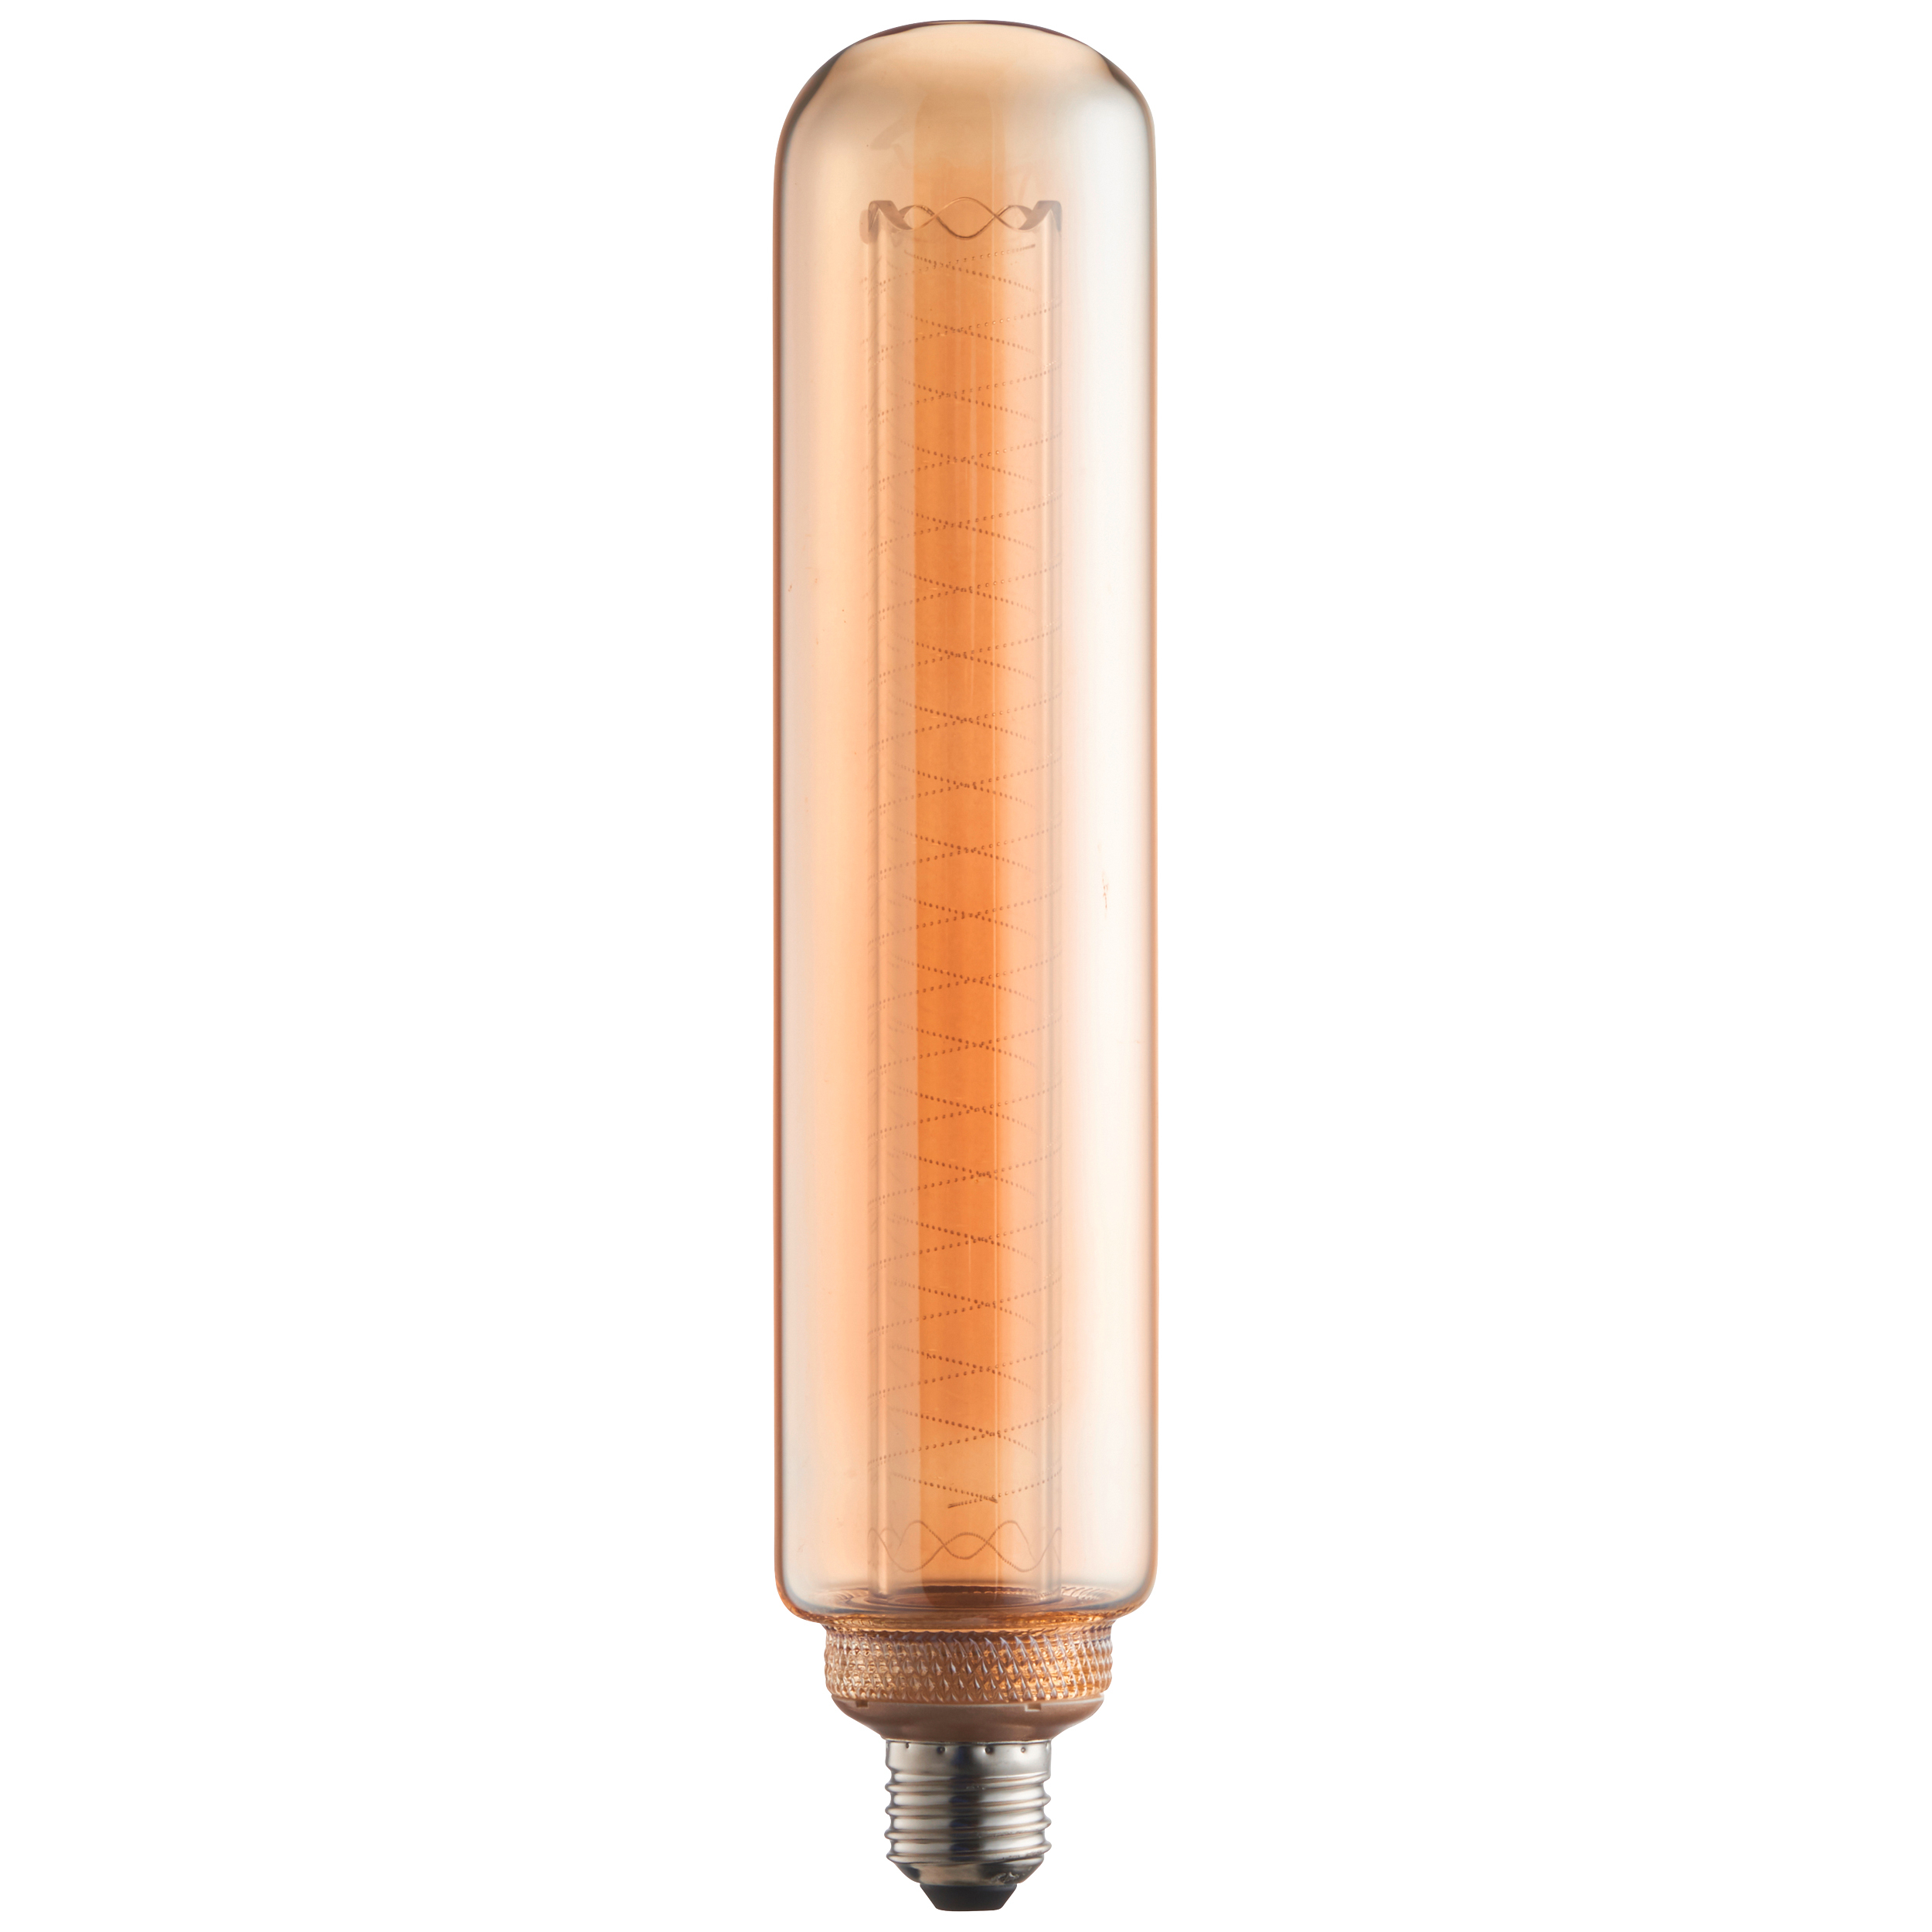 Leuchtmittel Filament Bulb bernstein Glas/Metall